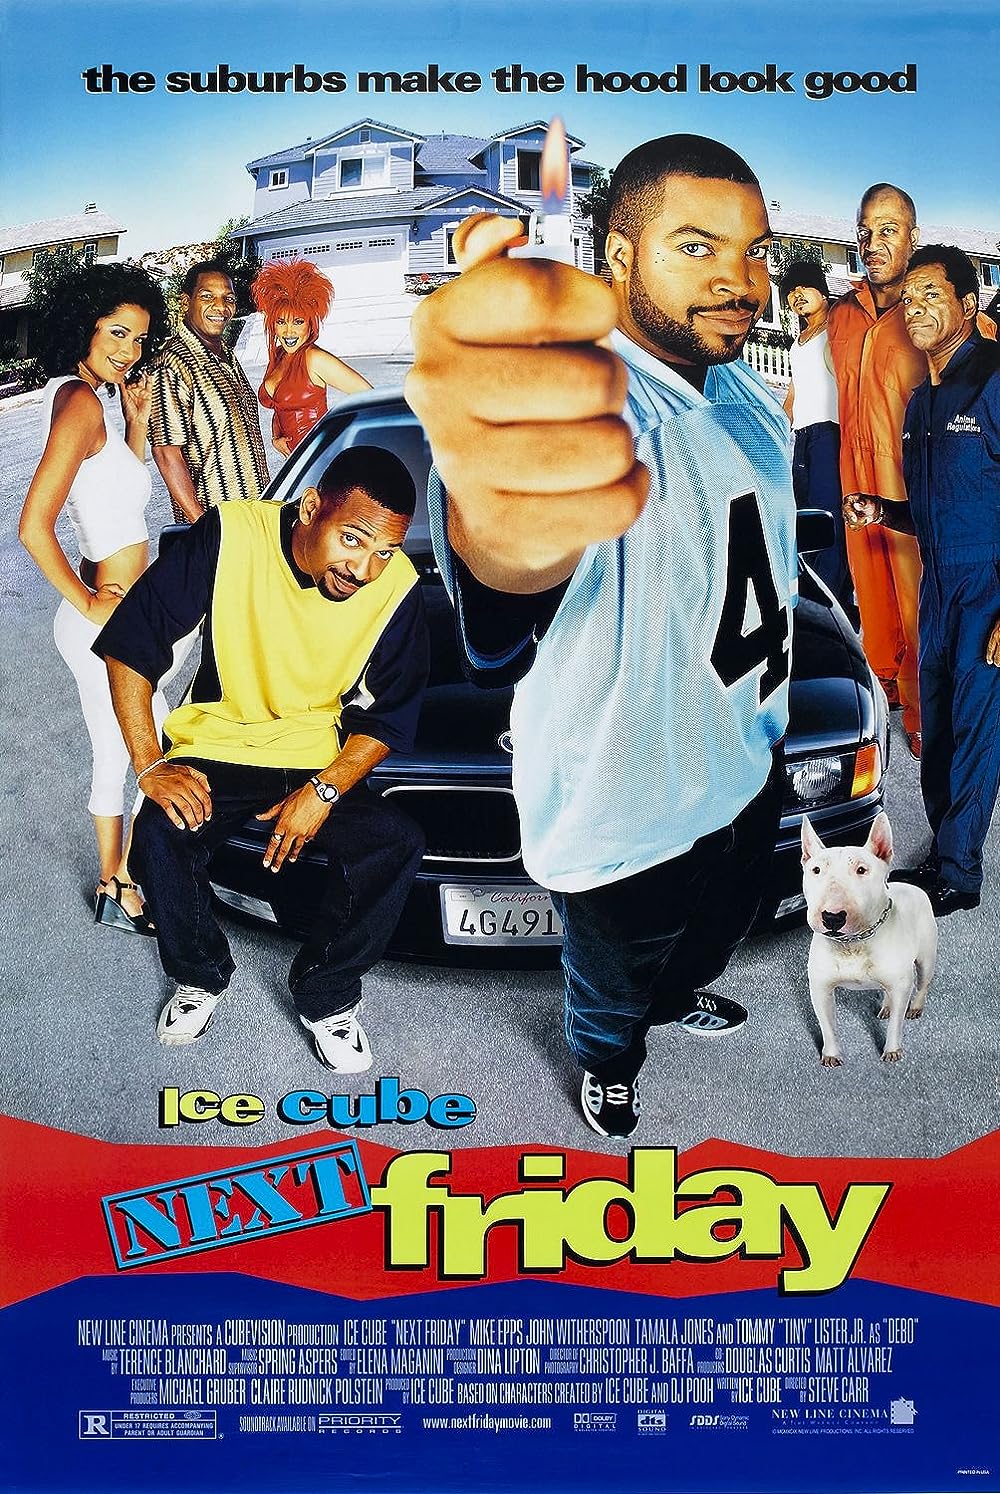 FULL MOVIE: Next Friday (2000)